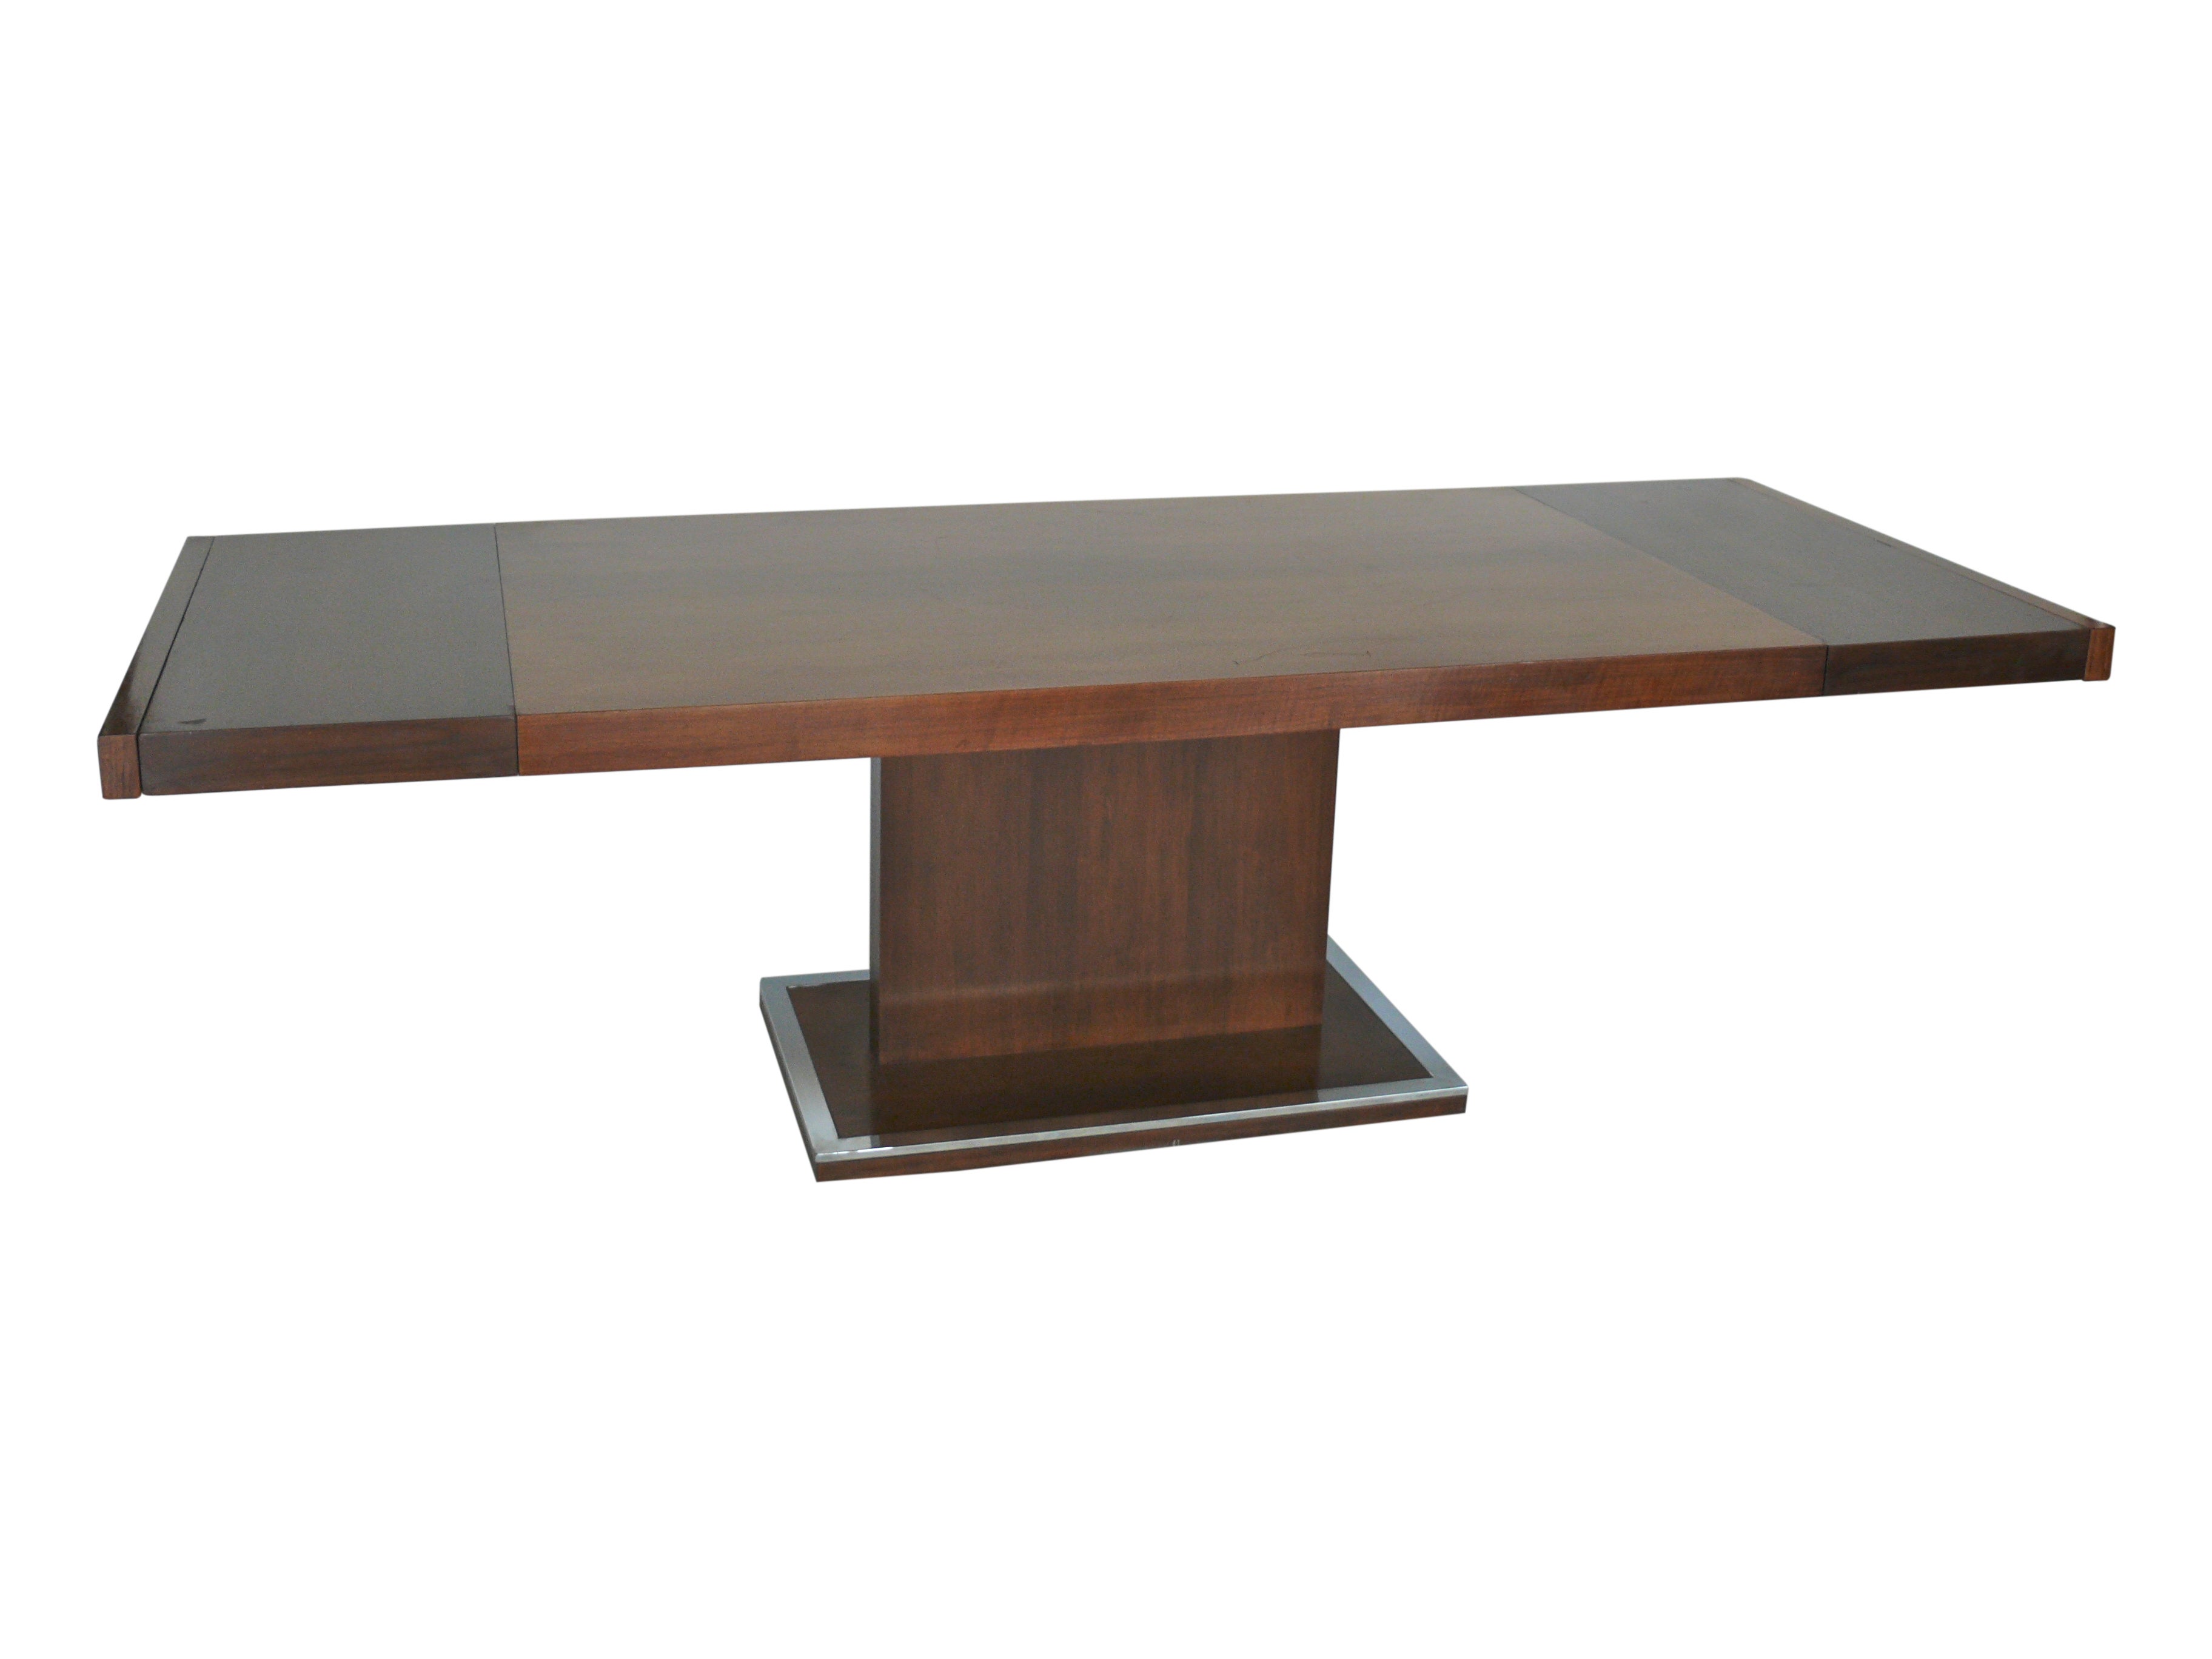 Pedestal Table by Milo Baughman